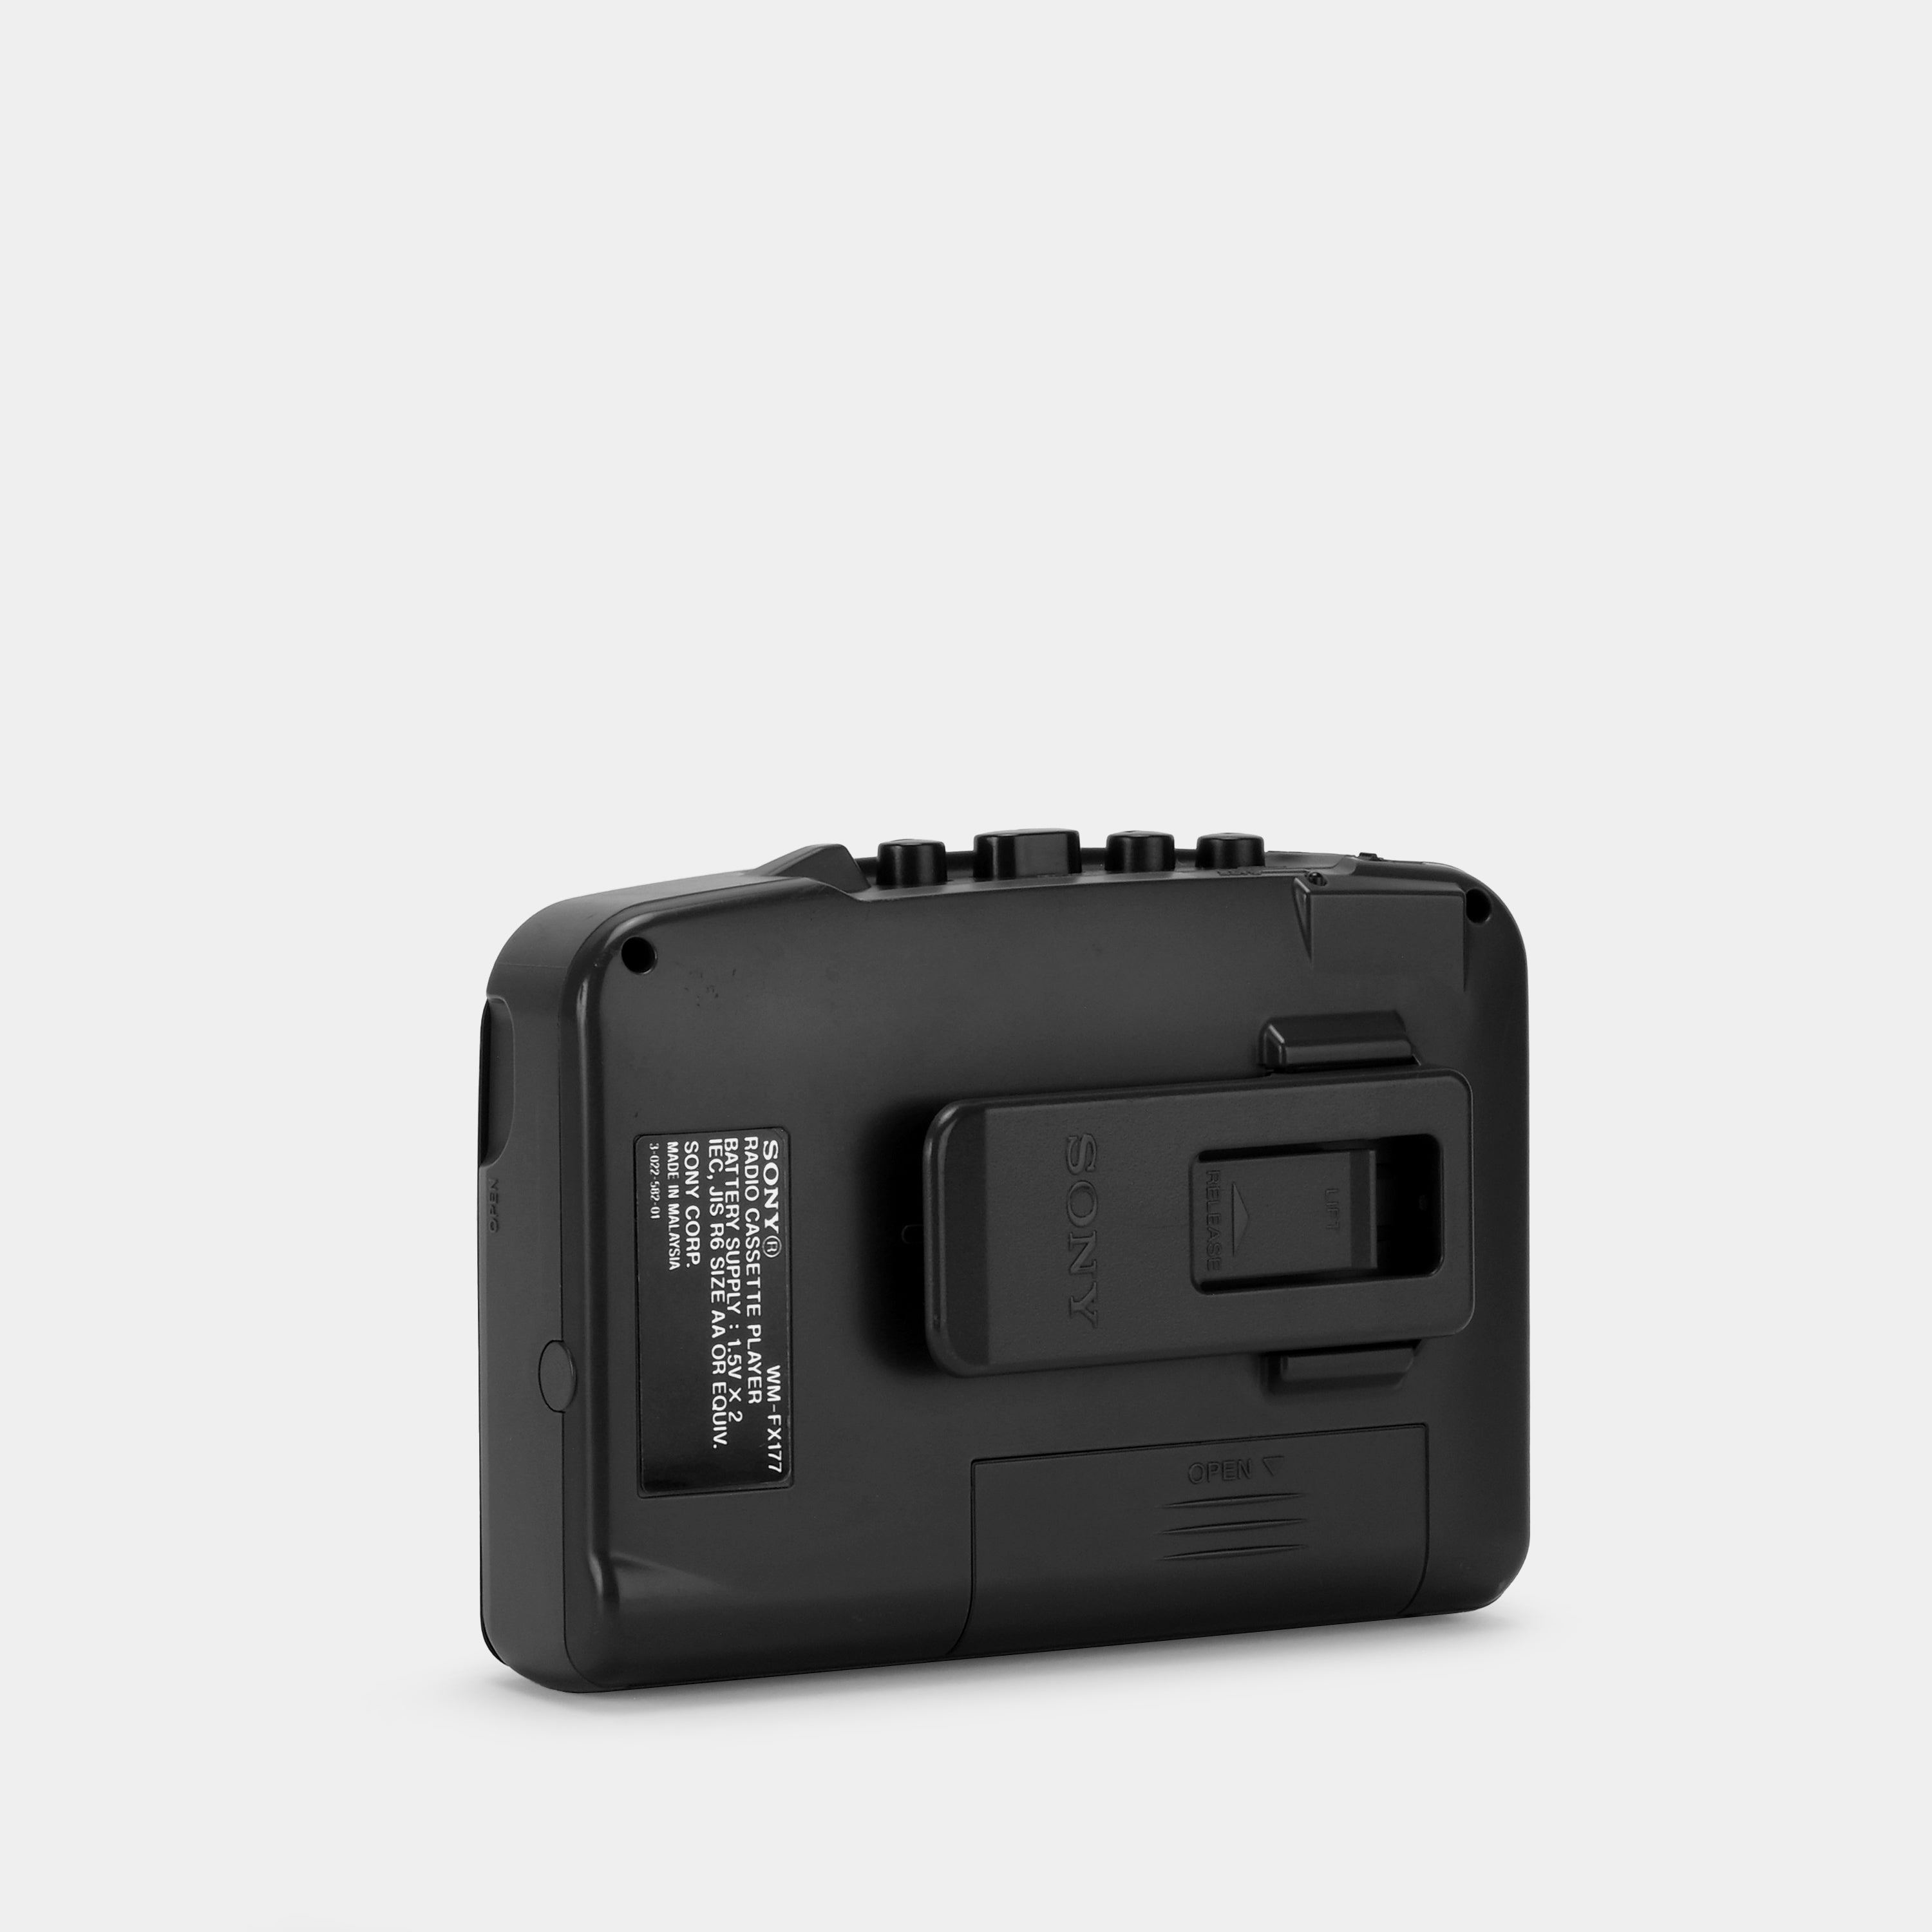 Sony Walkman WM-FX177 AM/FM Portable Cassette Player